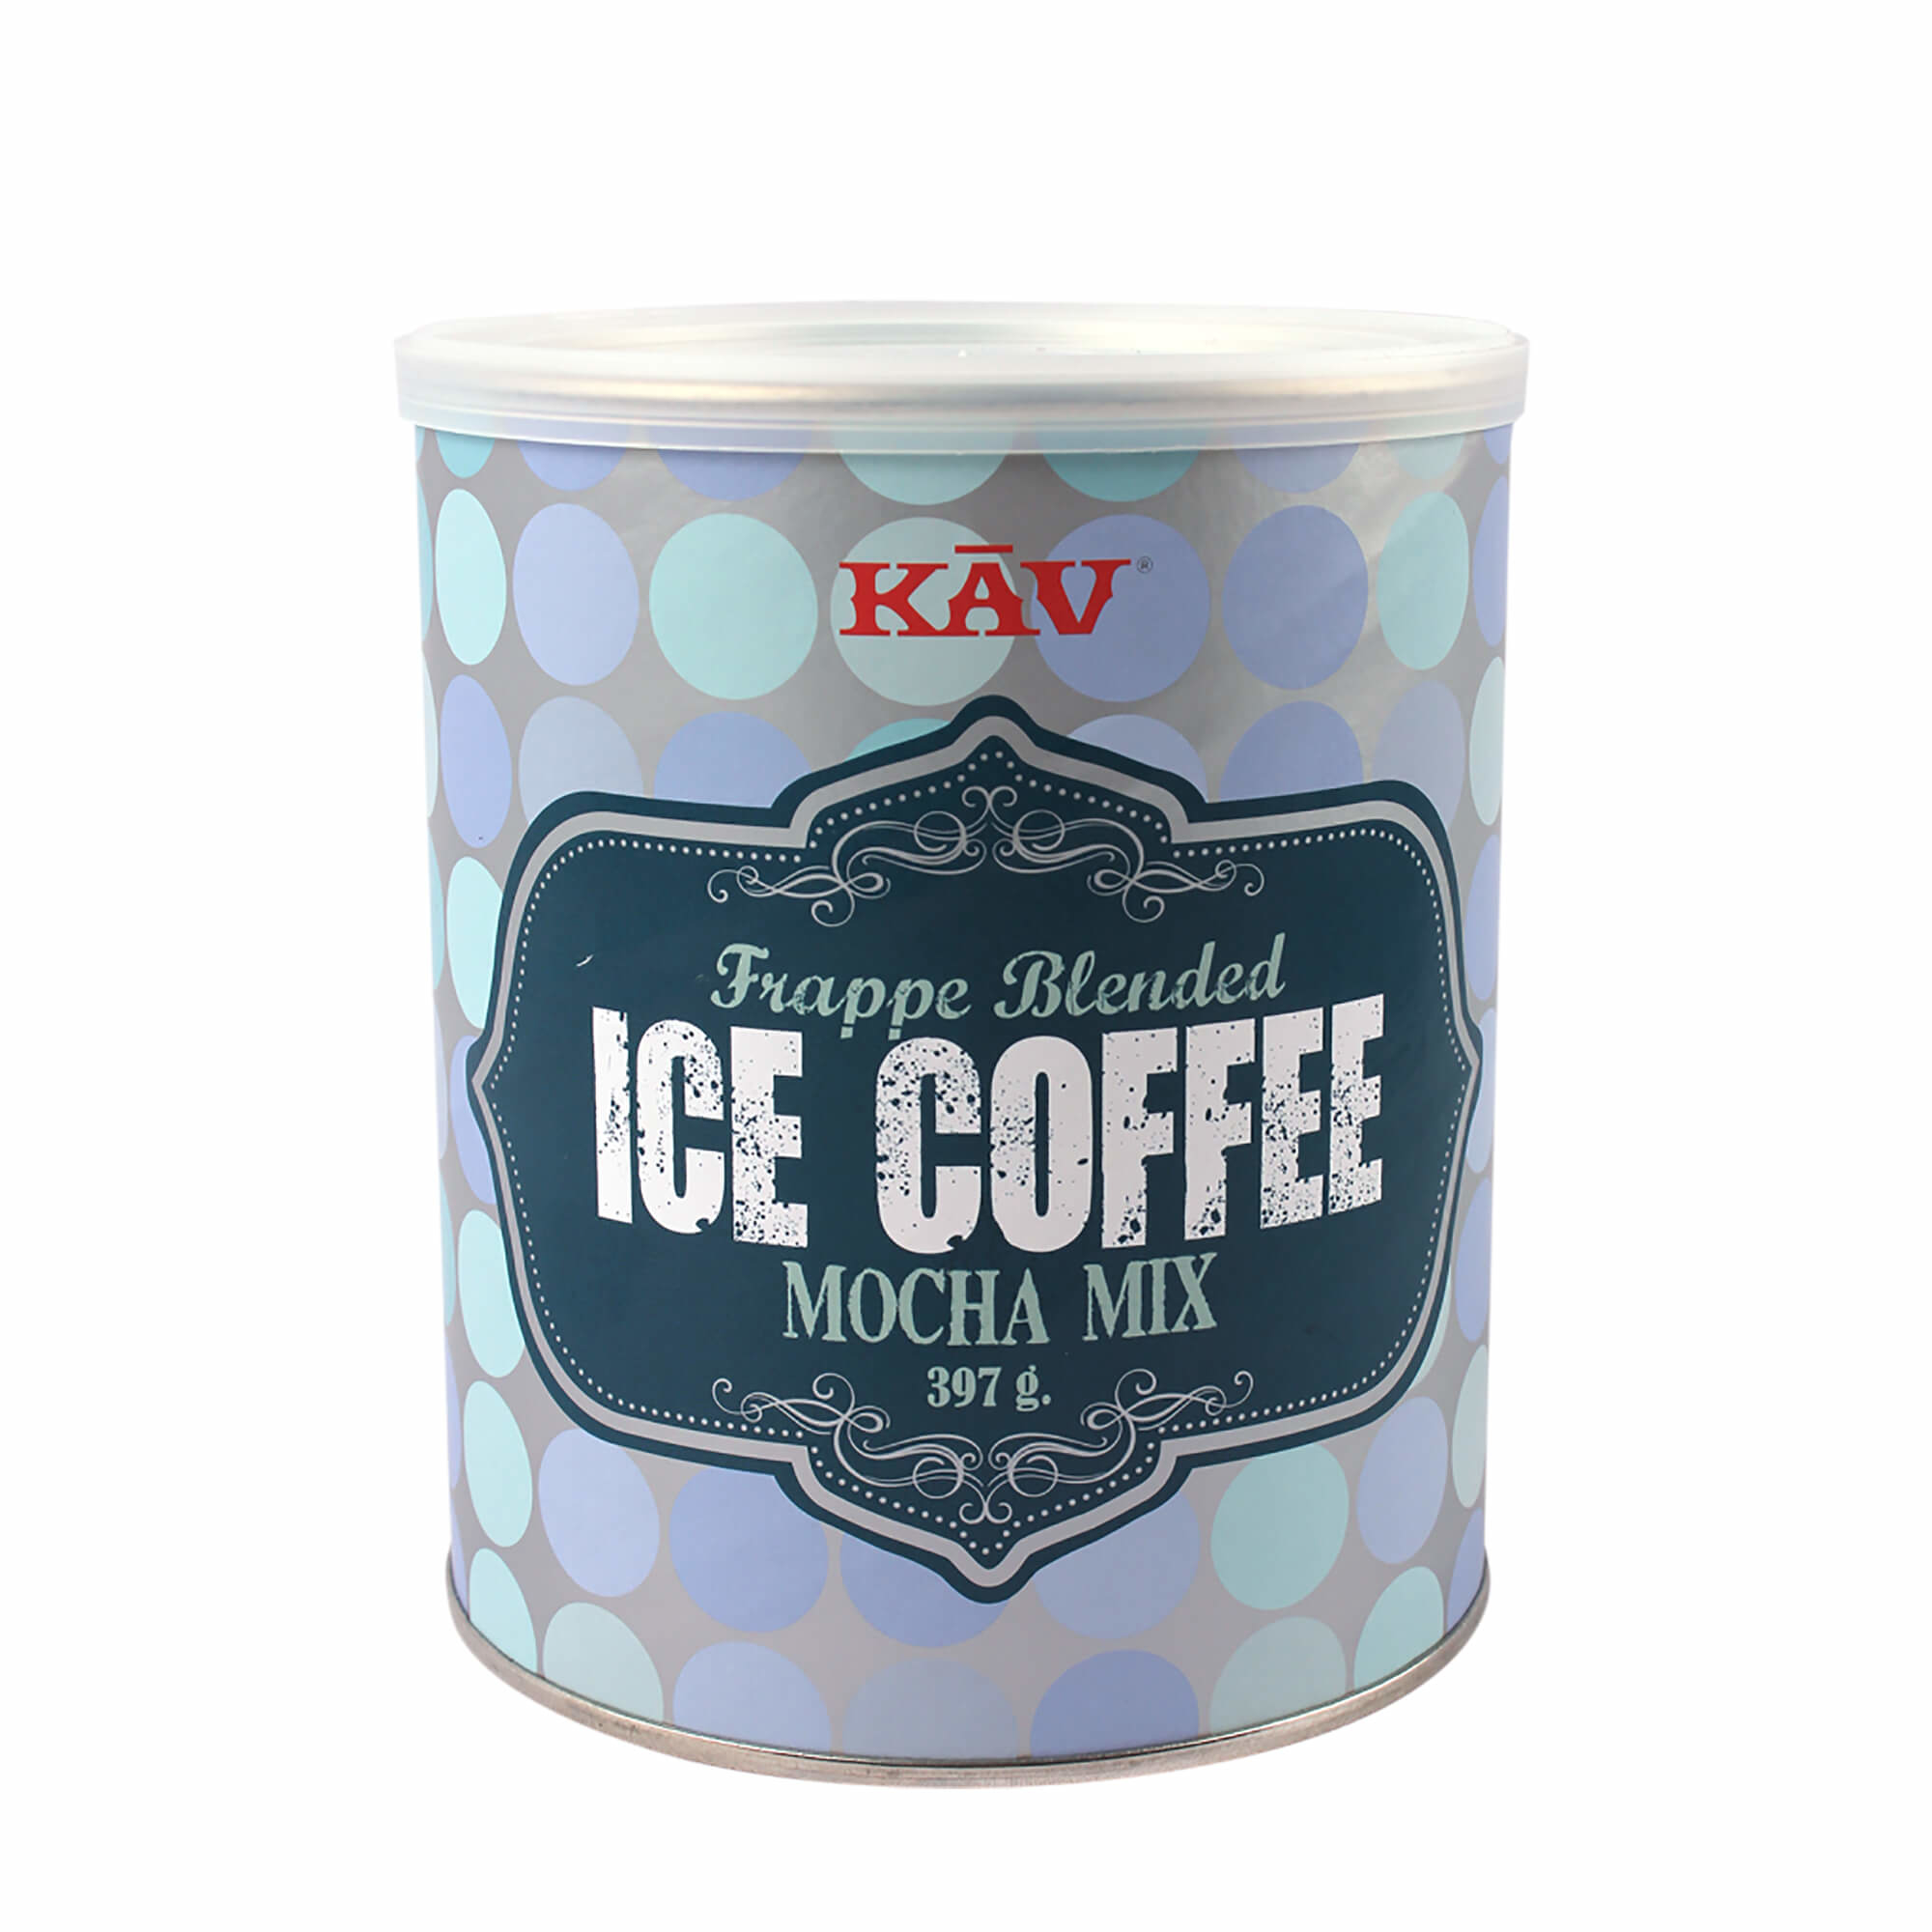 KAV Frappe Blended Ice Coffee Mocha Mix